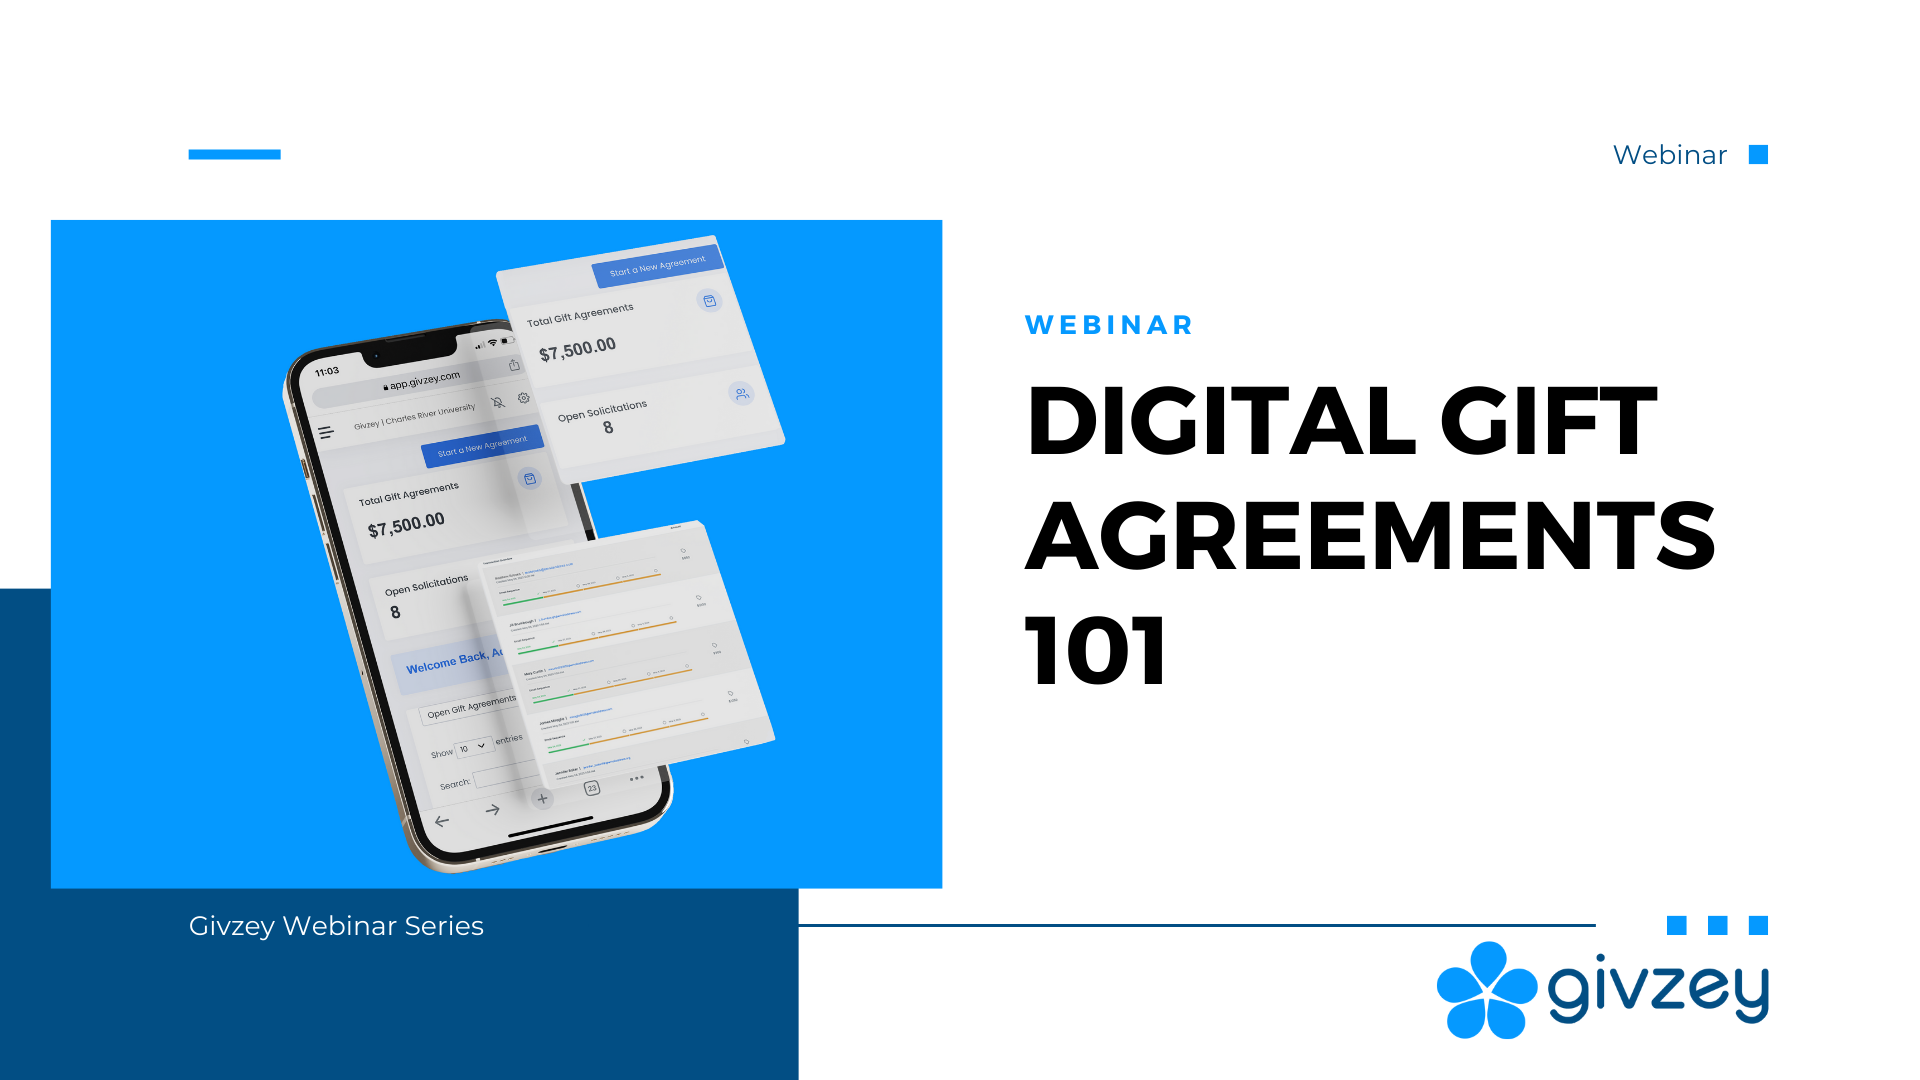 Webinar Digital Gift Agreements 101